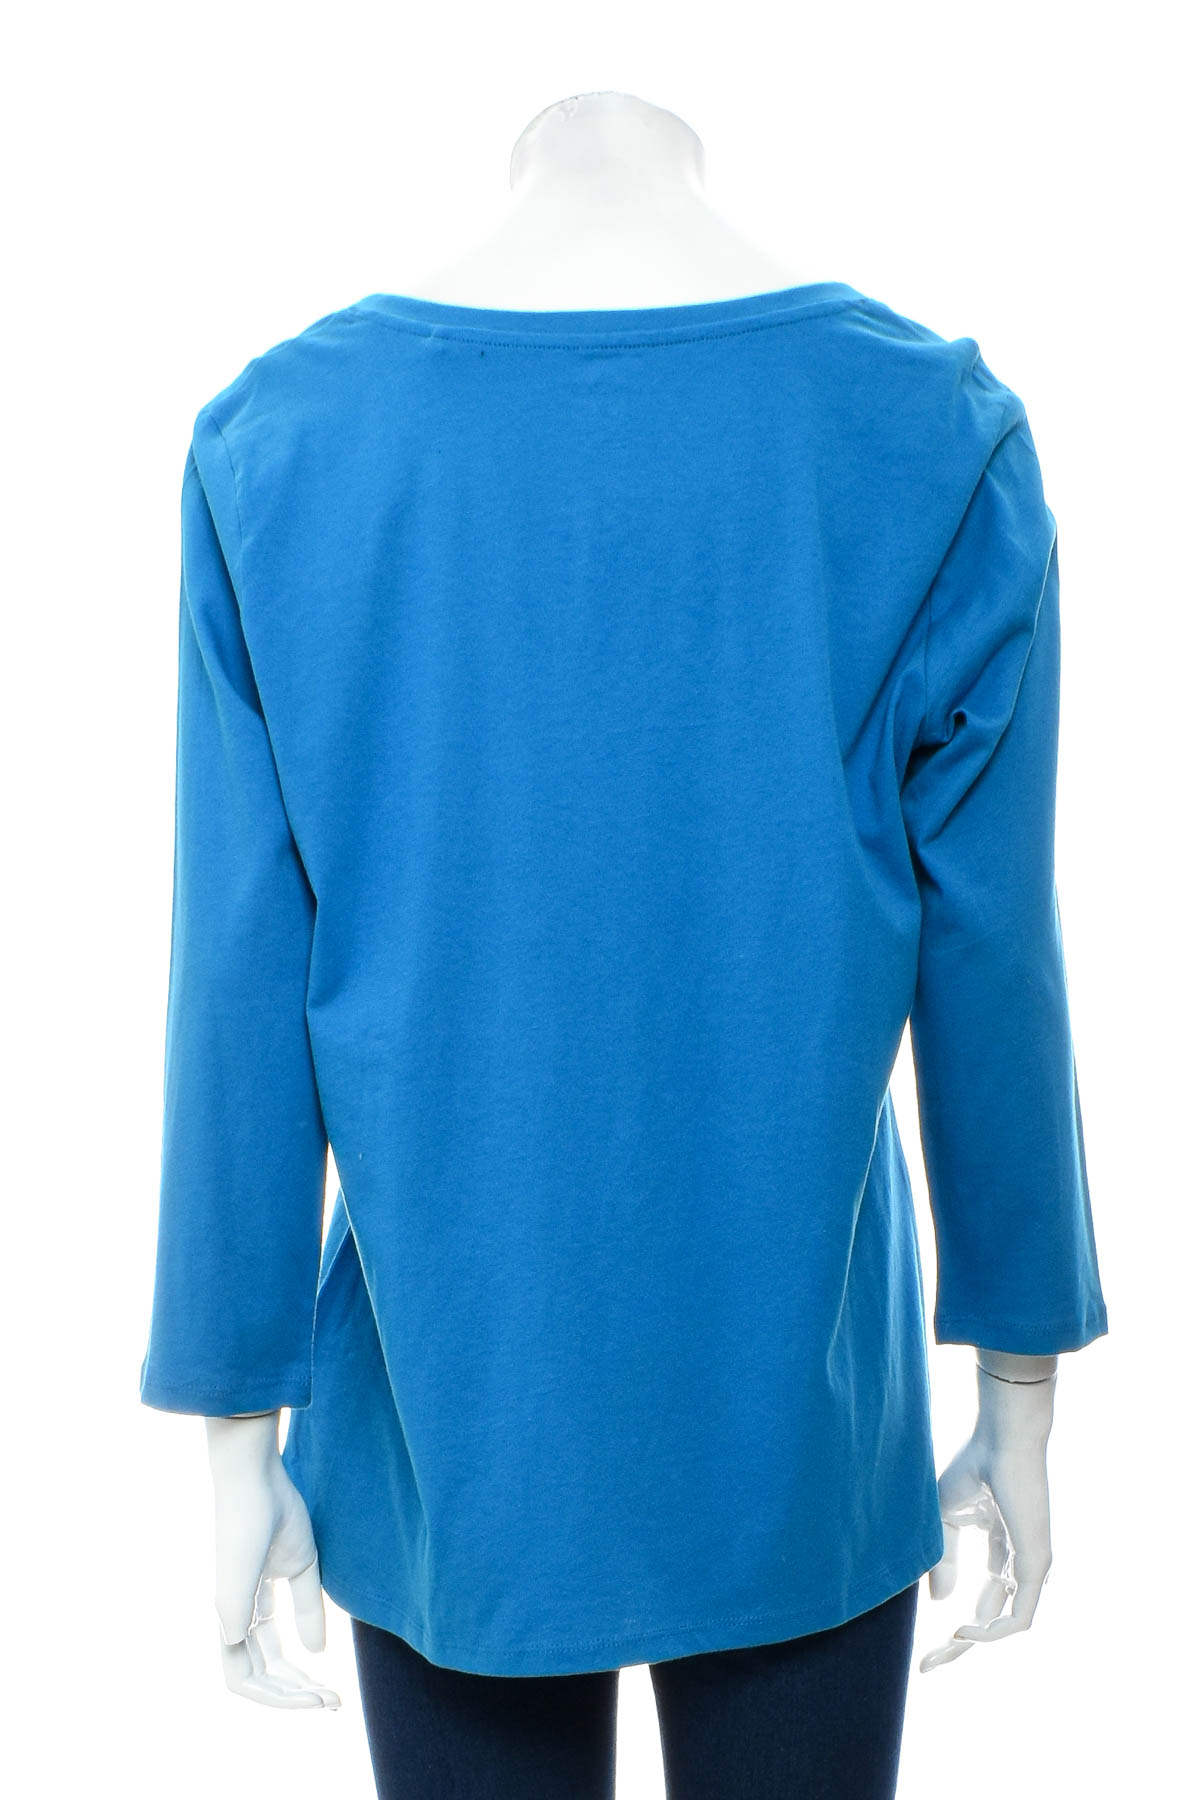 Women's blouse - Australian Cotton - 1